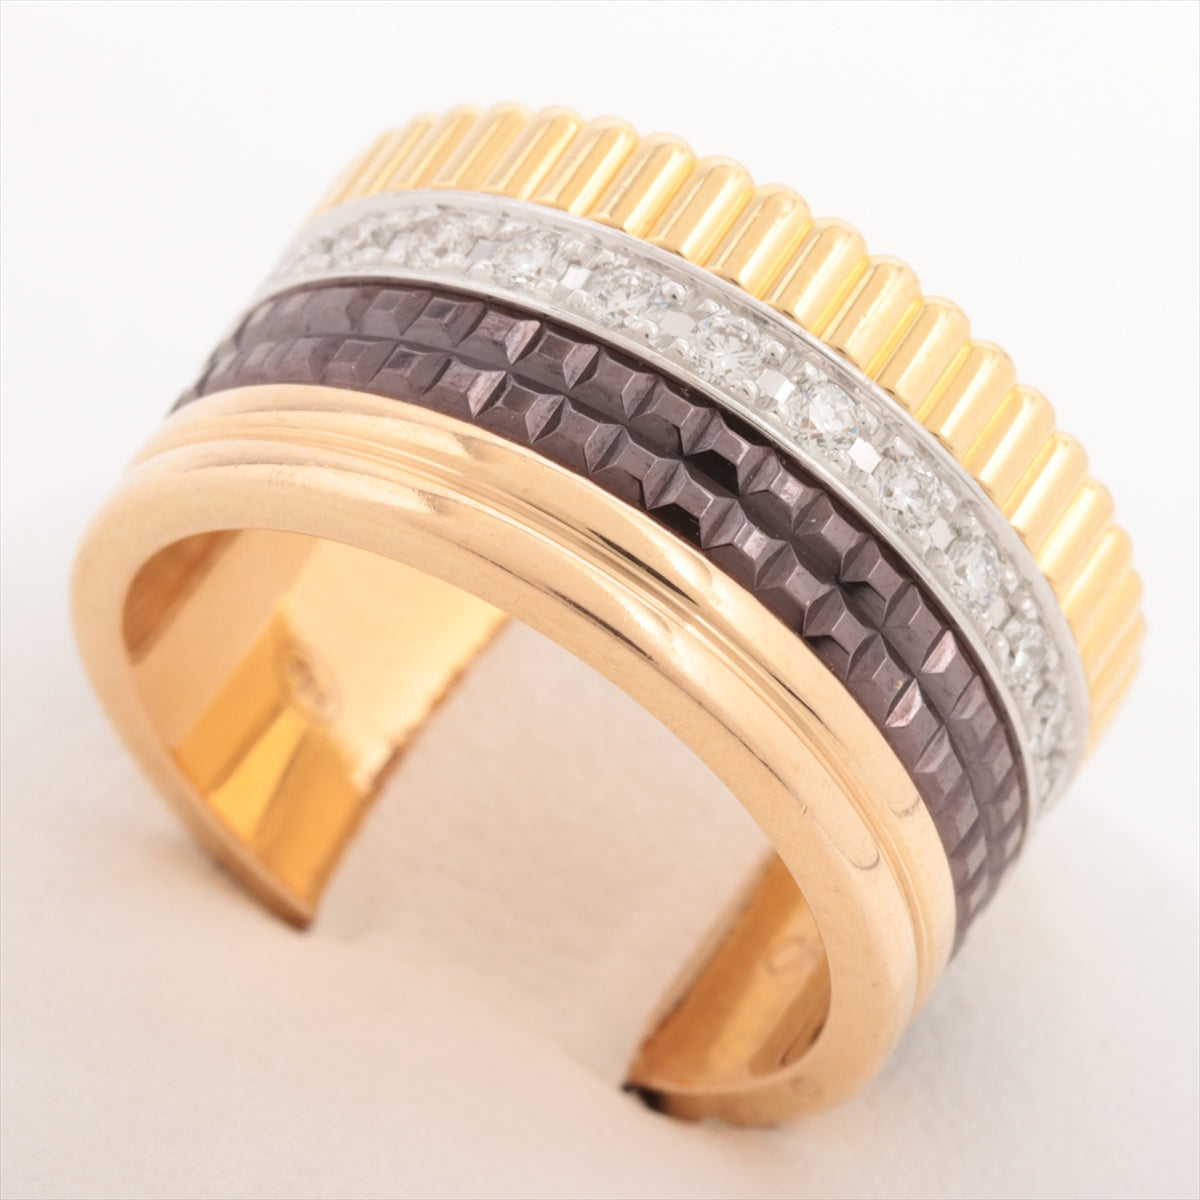 Boucheron Quatre Large diamond Ring 750(YG×PG×WG) 14.1g 53